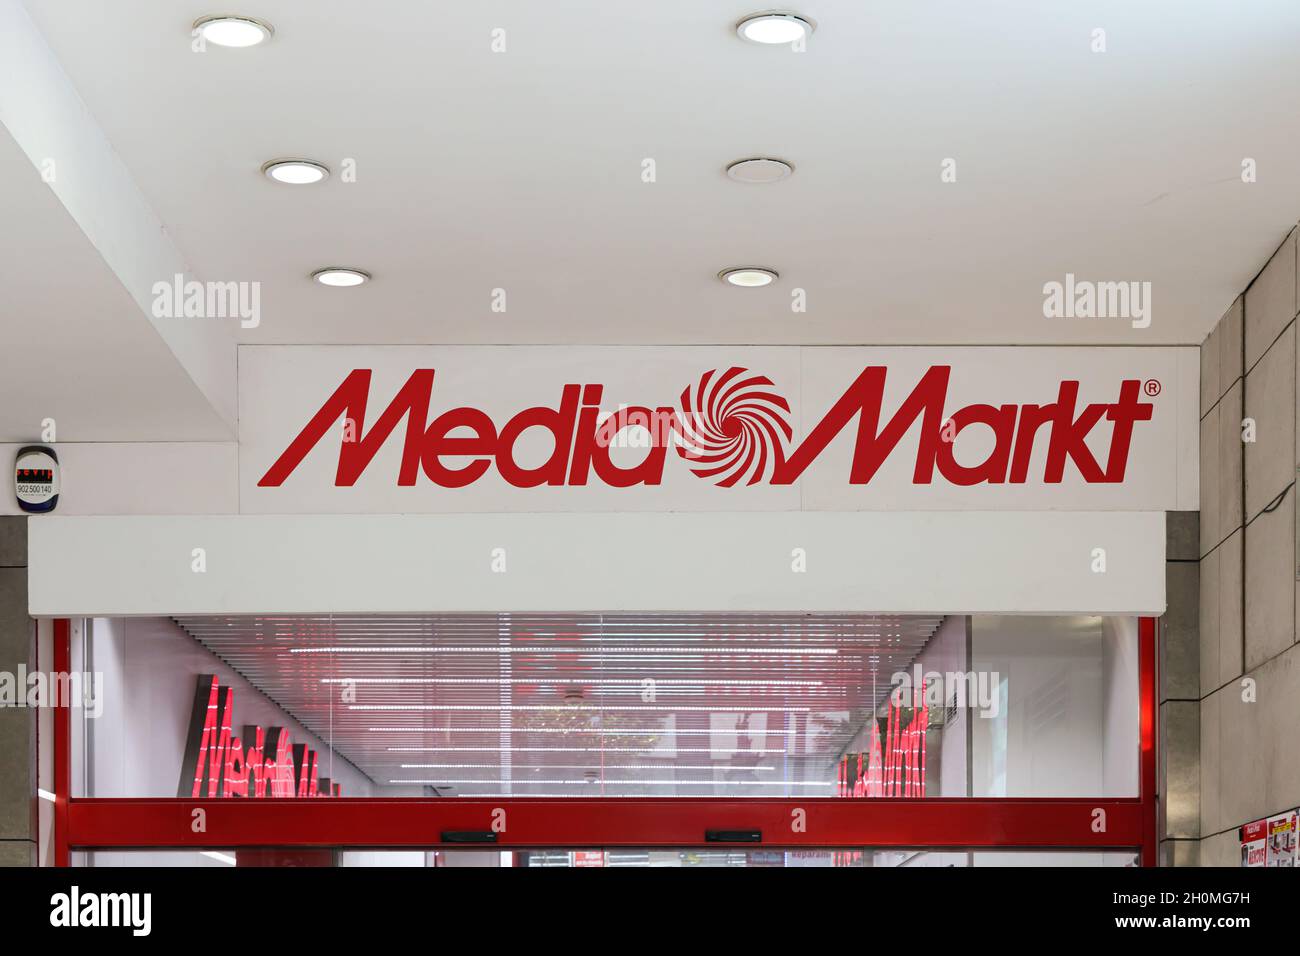 Media Markt Stores all over the World